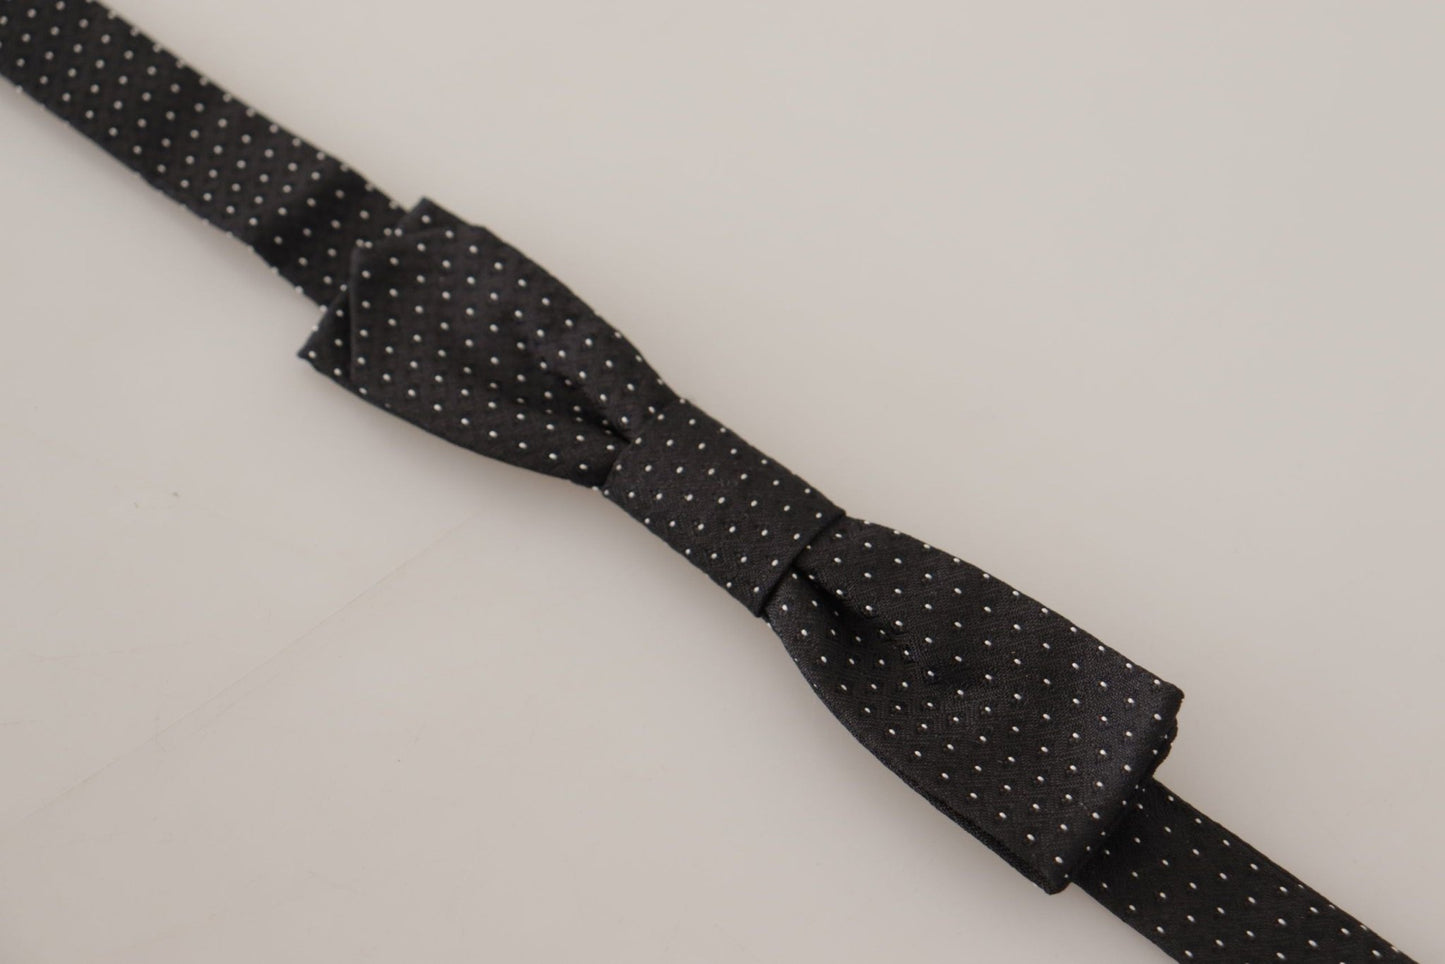 Dolce & Gabbana Elegant Black and White Silk Bow Tie